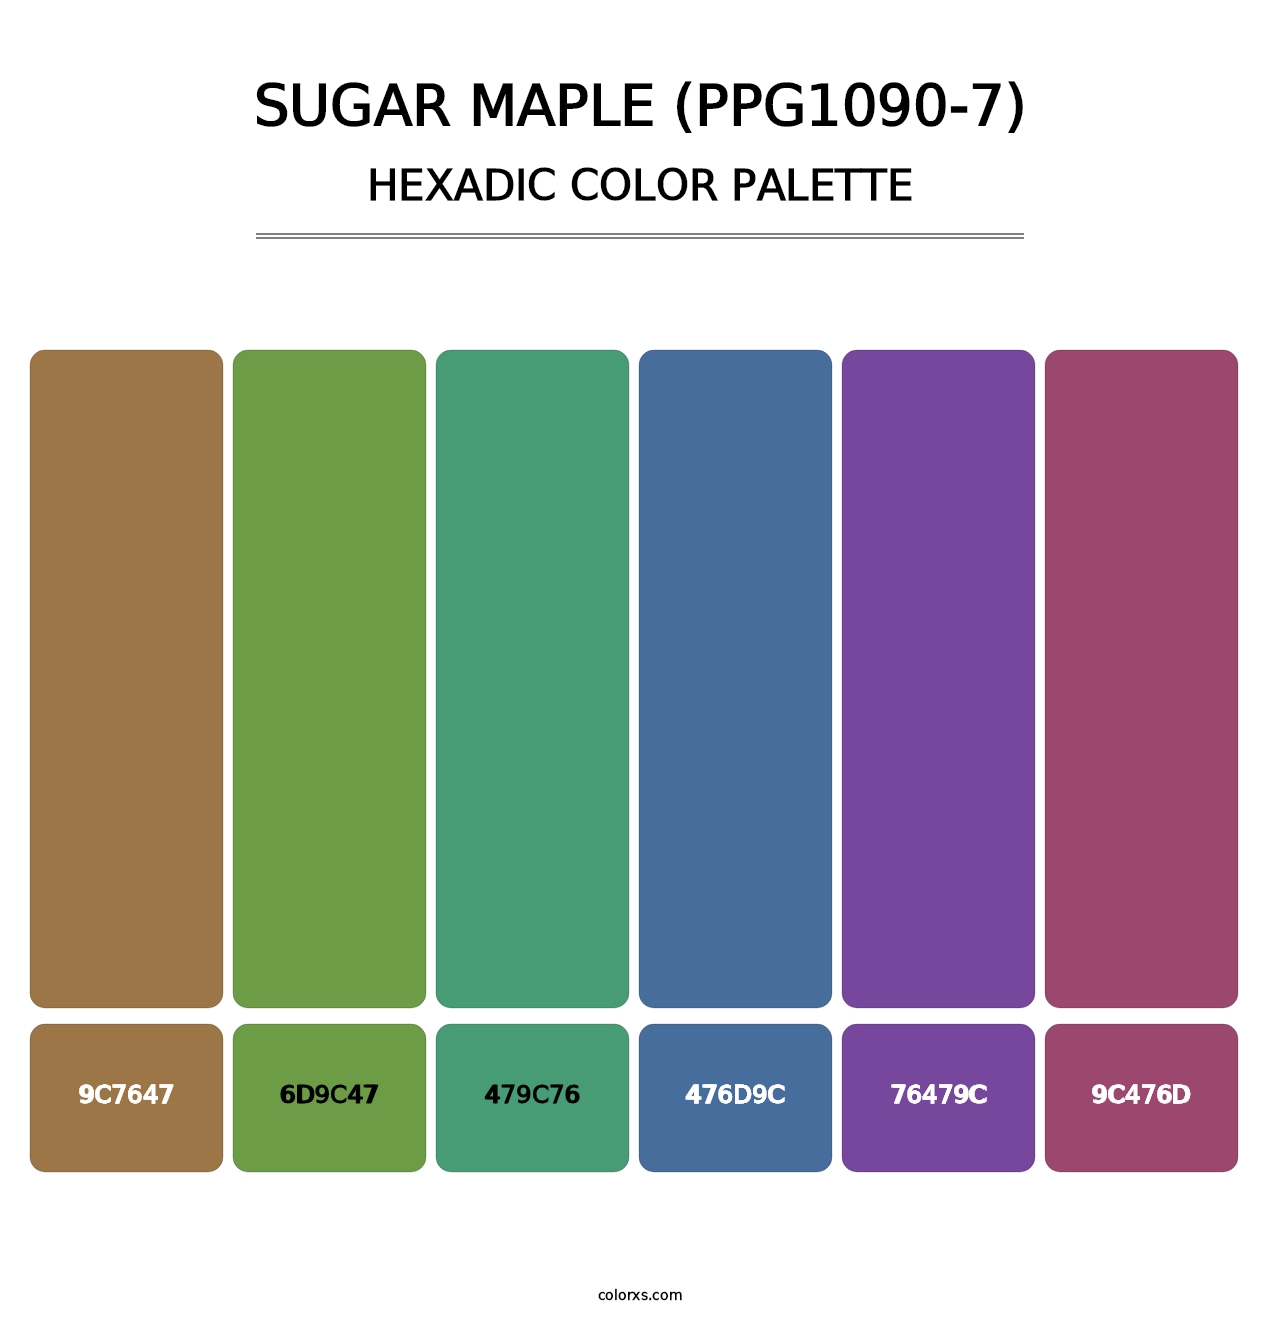 Sugar Maple (PPG1090-7) - Hexadic Color Palette